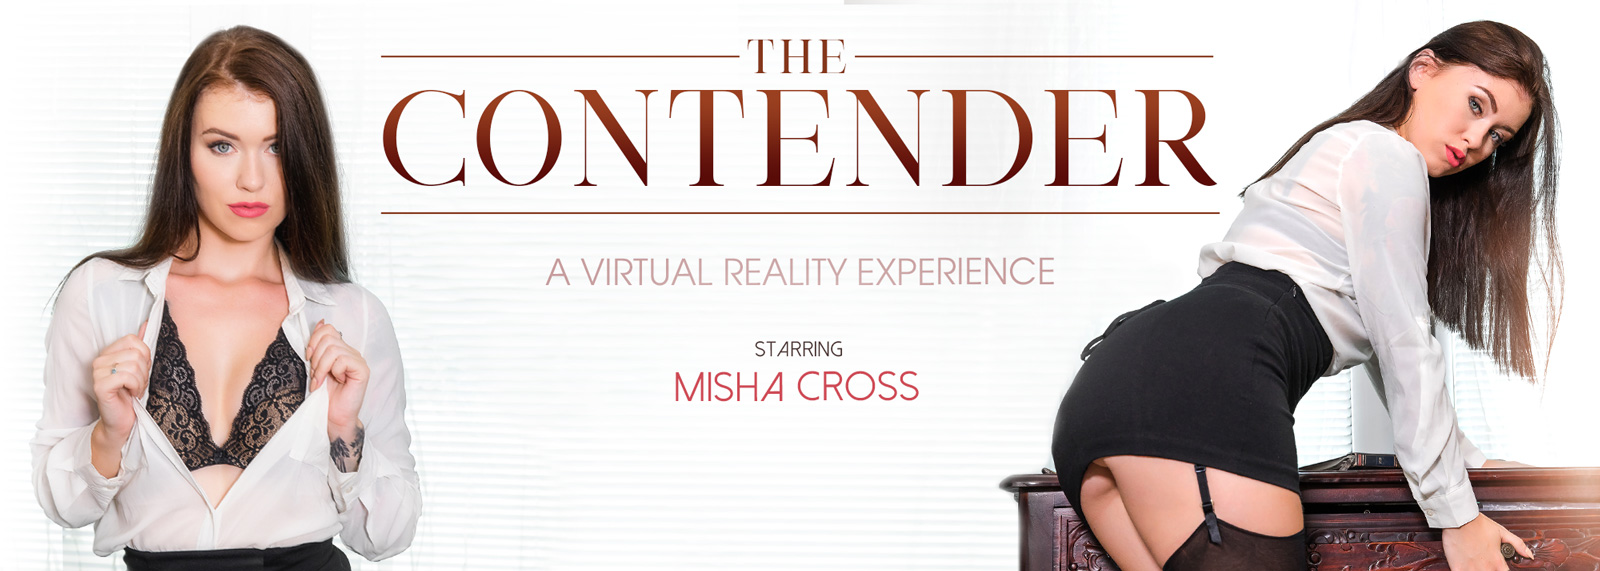 The Contender - VR Porn Video, Starring: Misha Cross